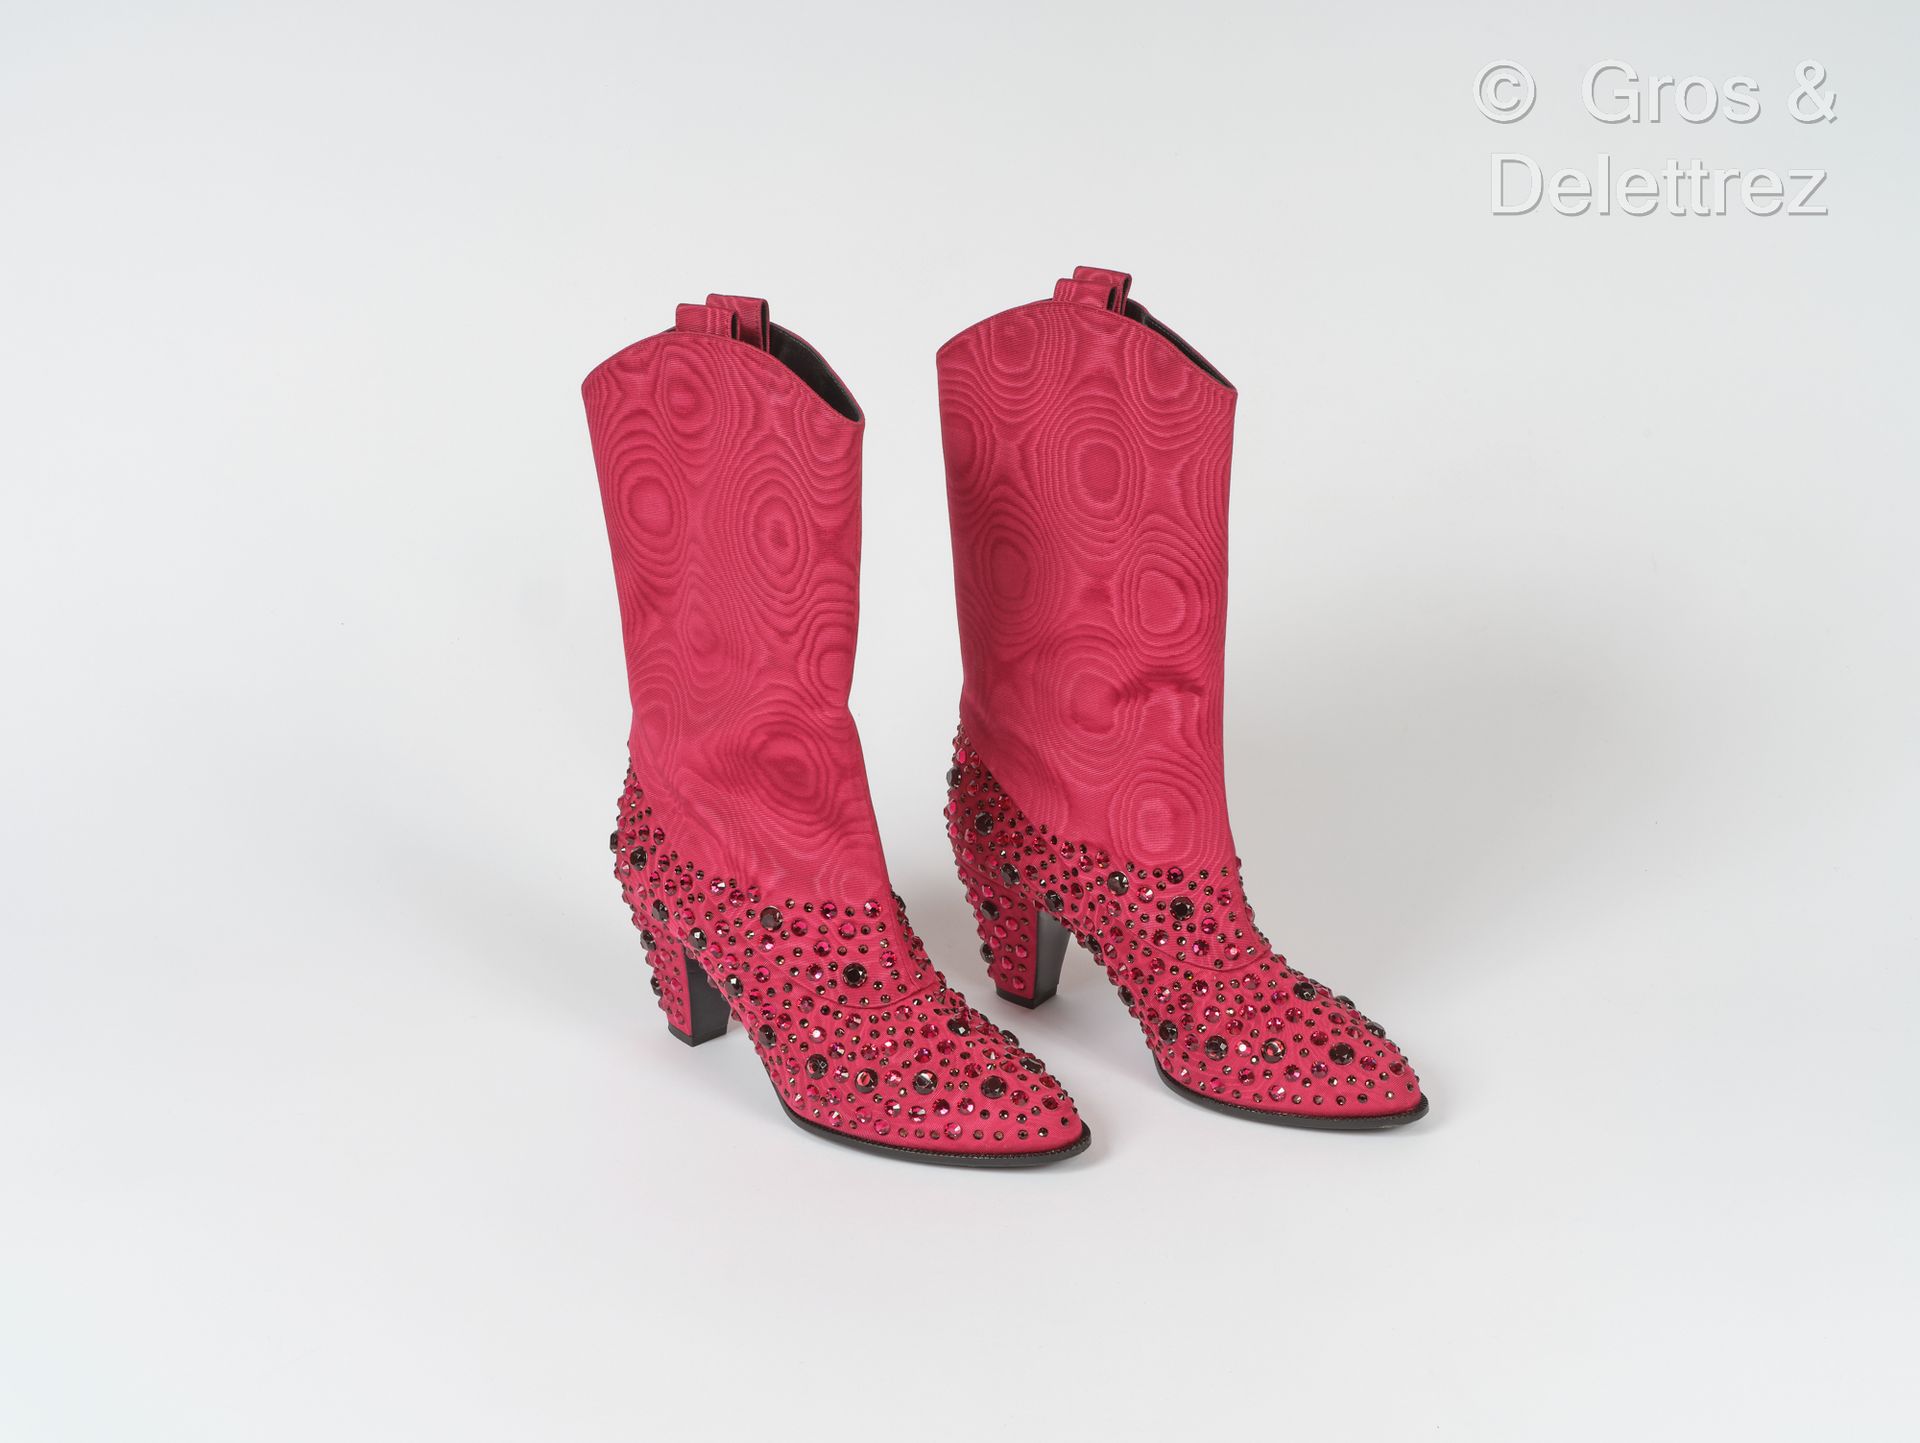 GUCCI par Alessandro Michele Collection Pre-Fall 2020 – Look n°5
Paire de boots &hellip;